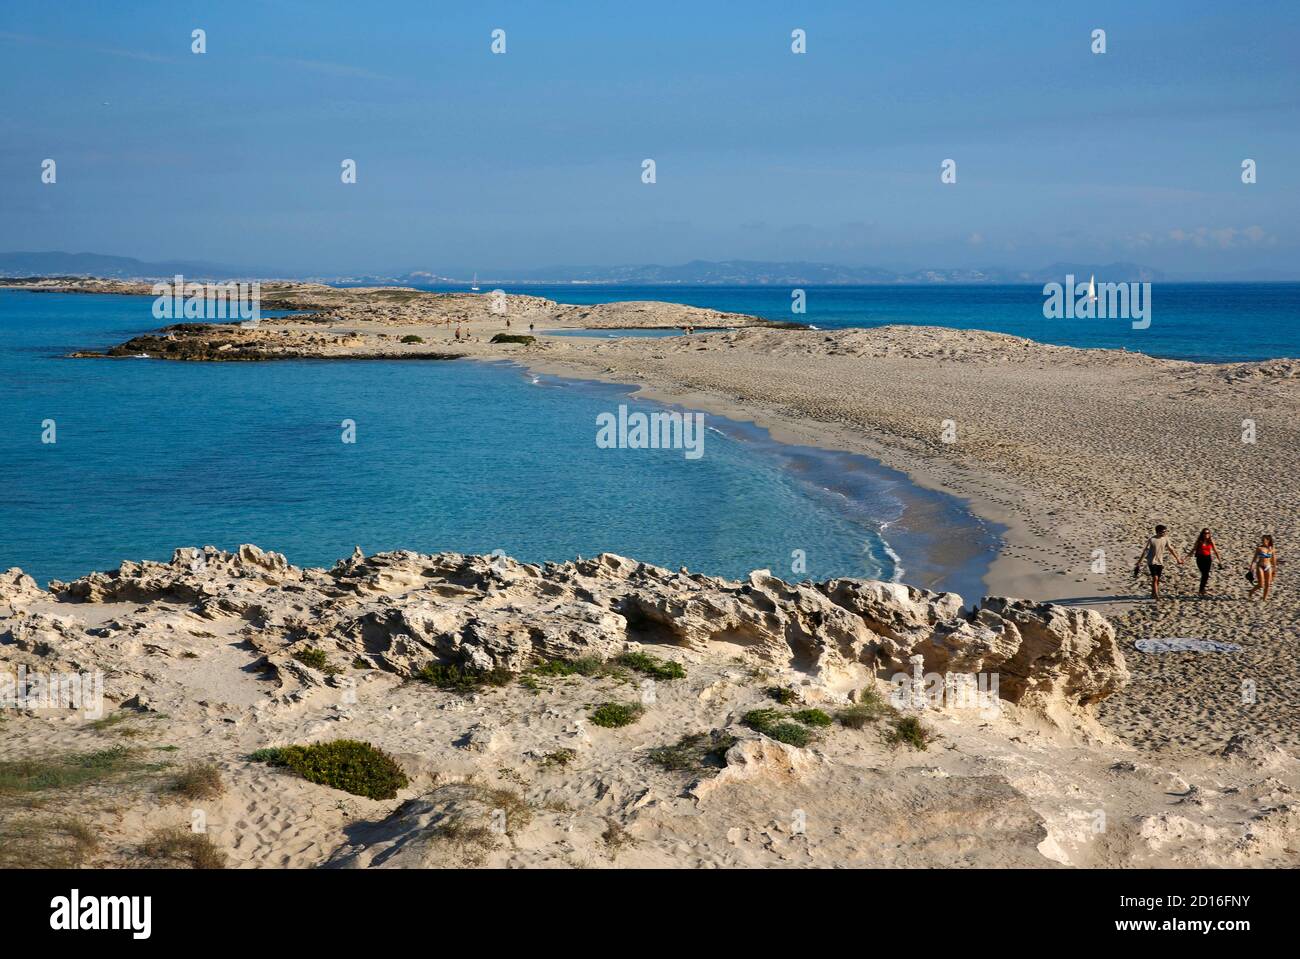 Spain, Balearic islands, formentera, platja de ses illetes, people walking on the fine sandy beach bathed in clear water Stock Photo